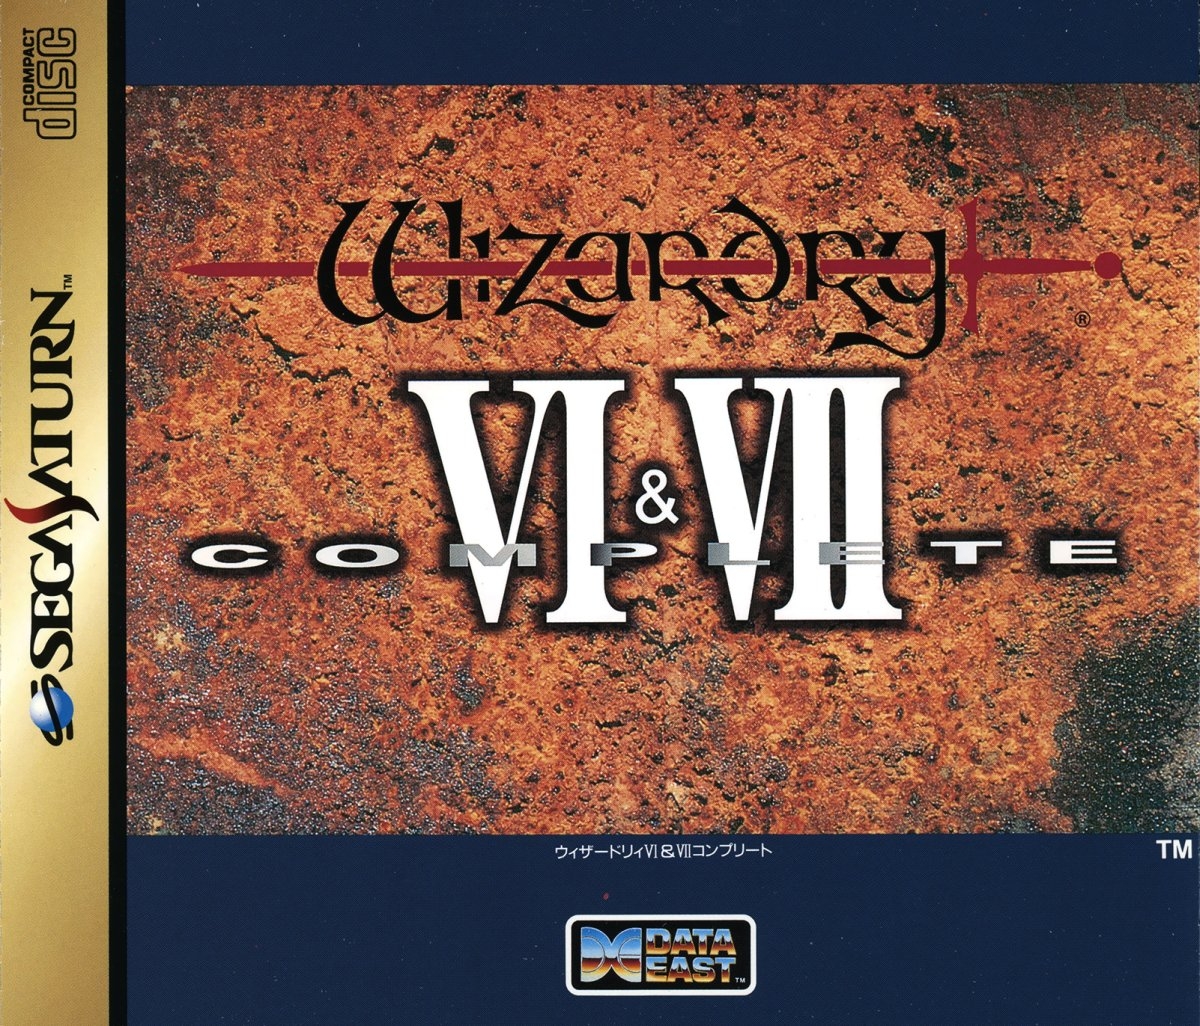 Wizardry VI & VII Complete cover